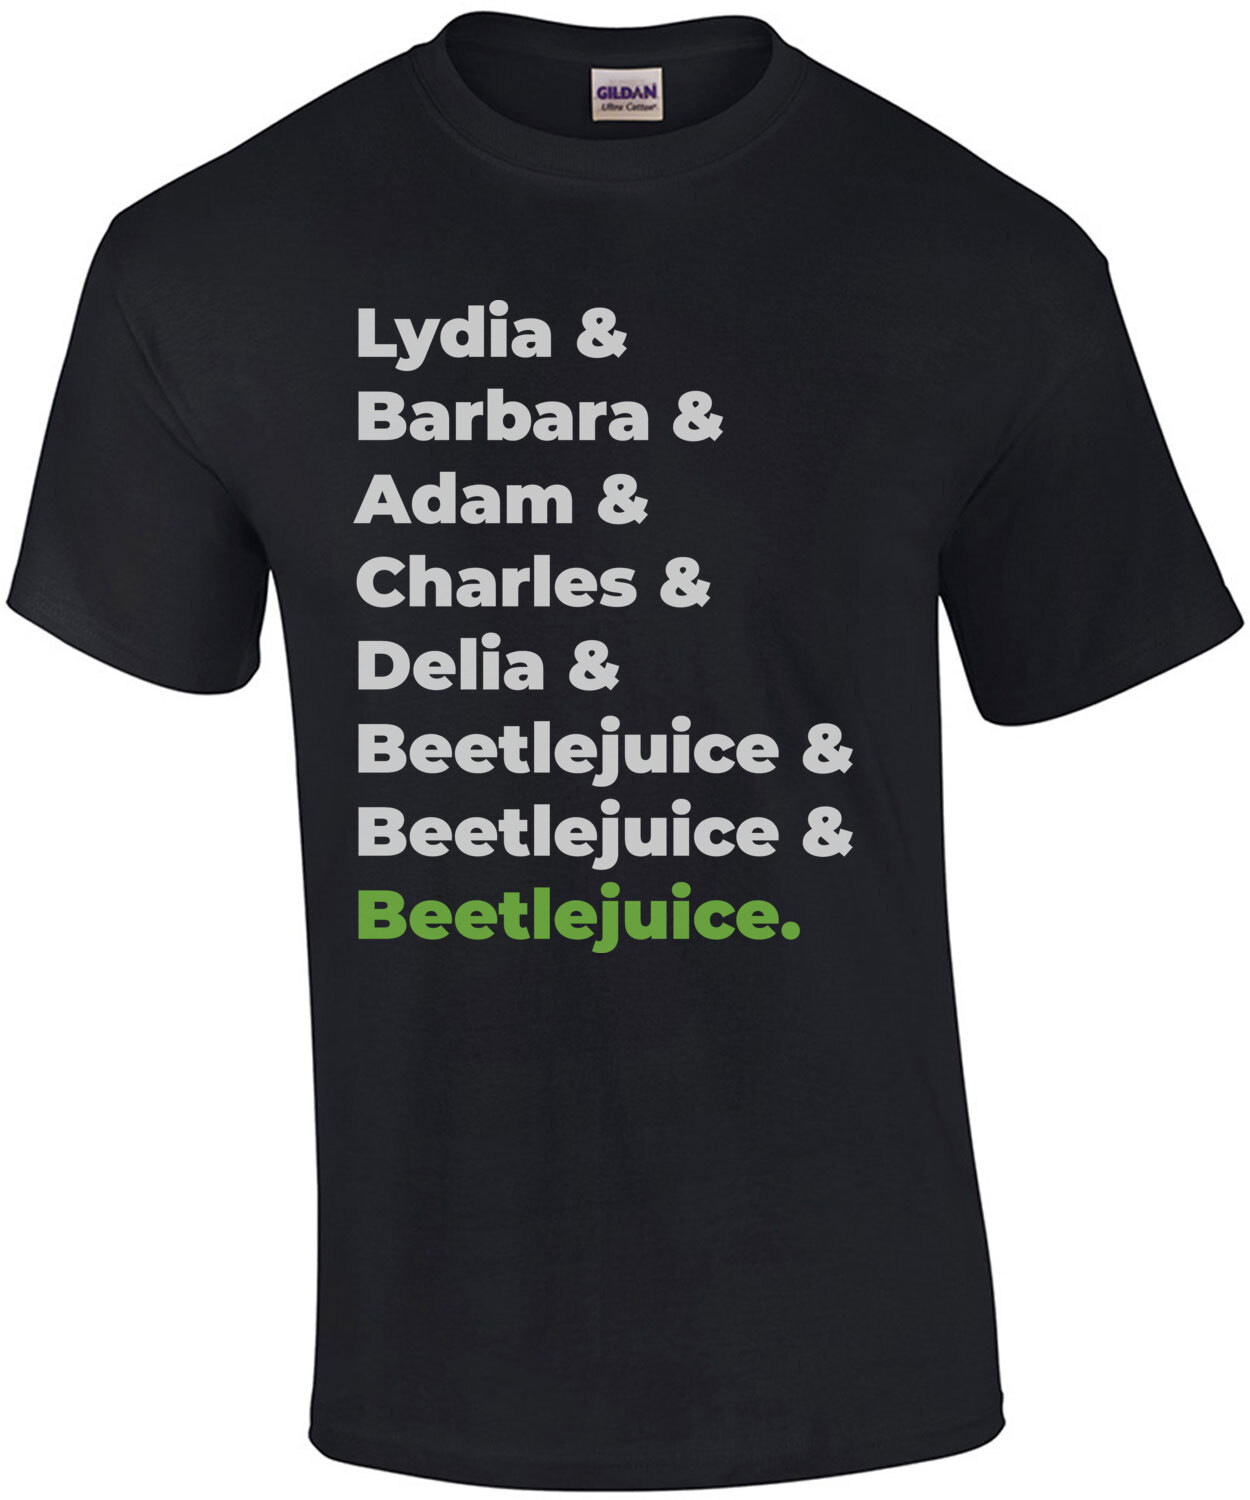 Lydia & Barbara & Adam & Charles & Delia & Beetlejuice - 80's T-Shirt 